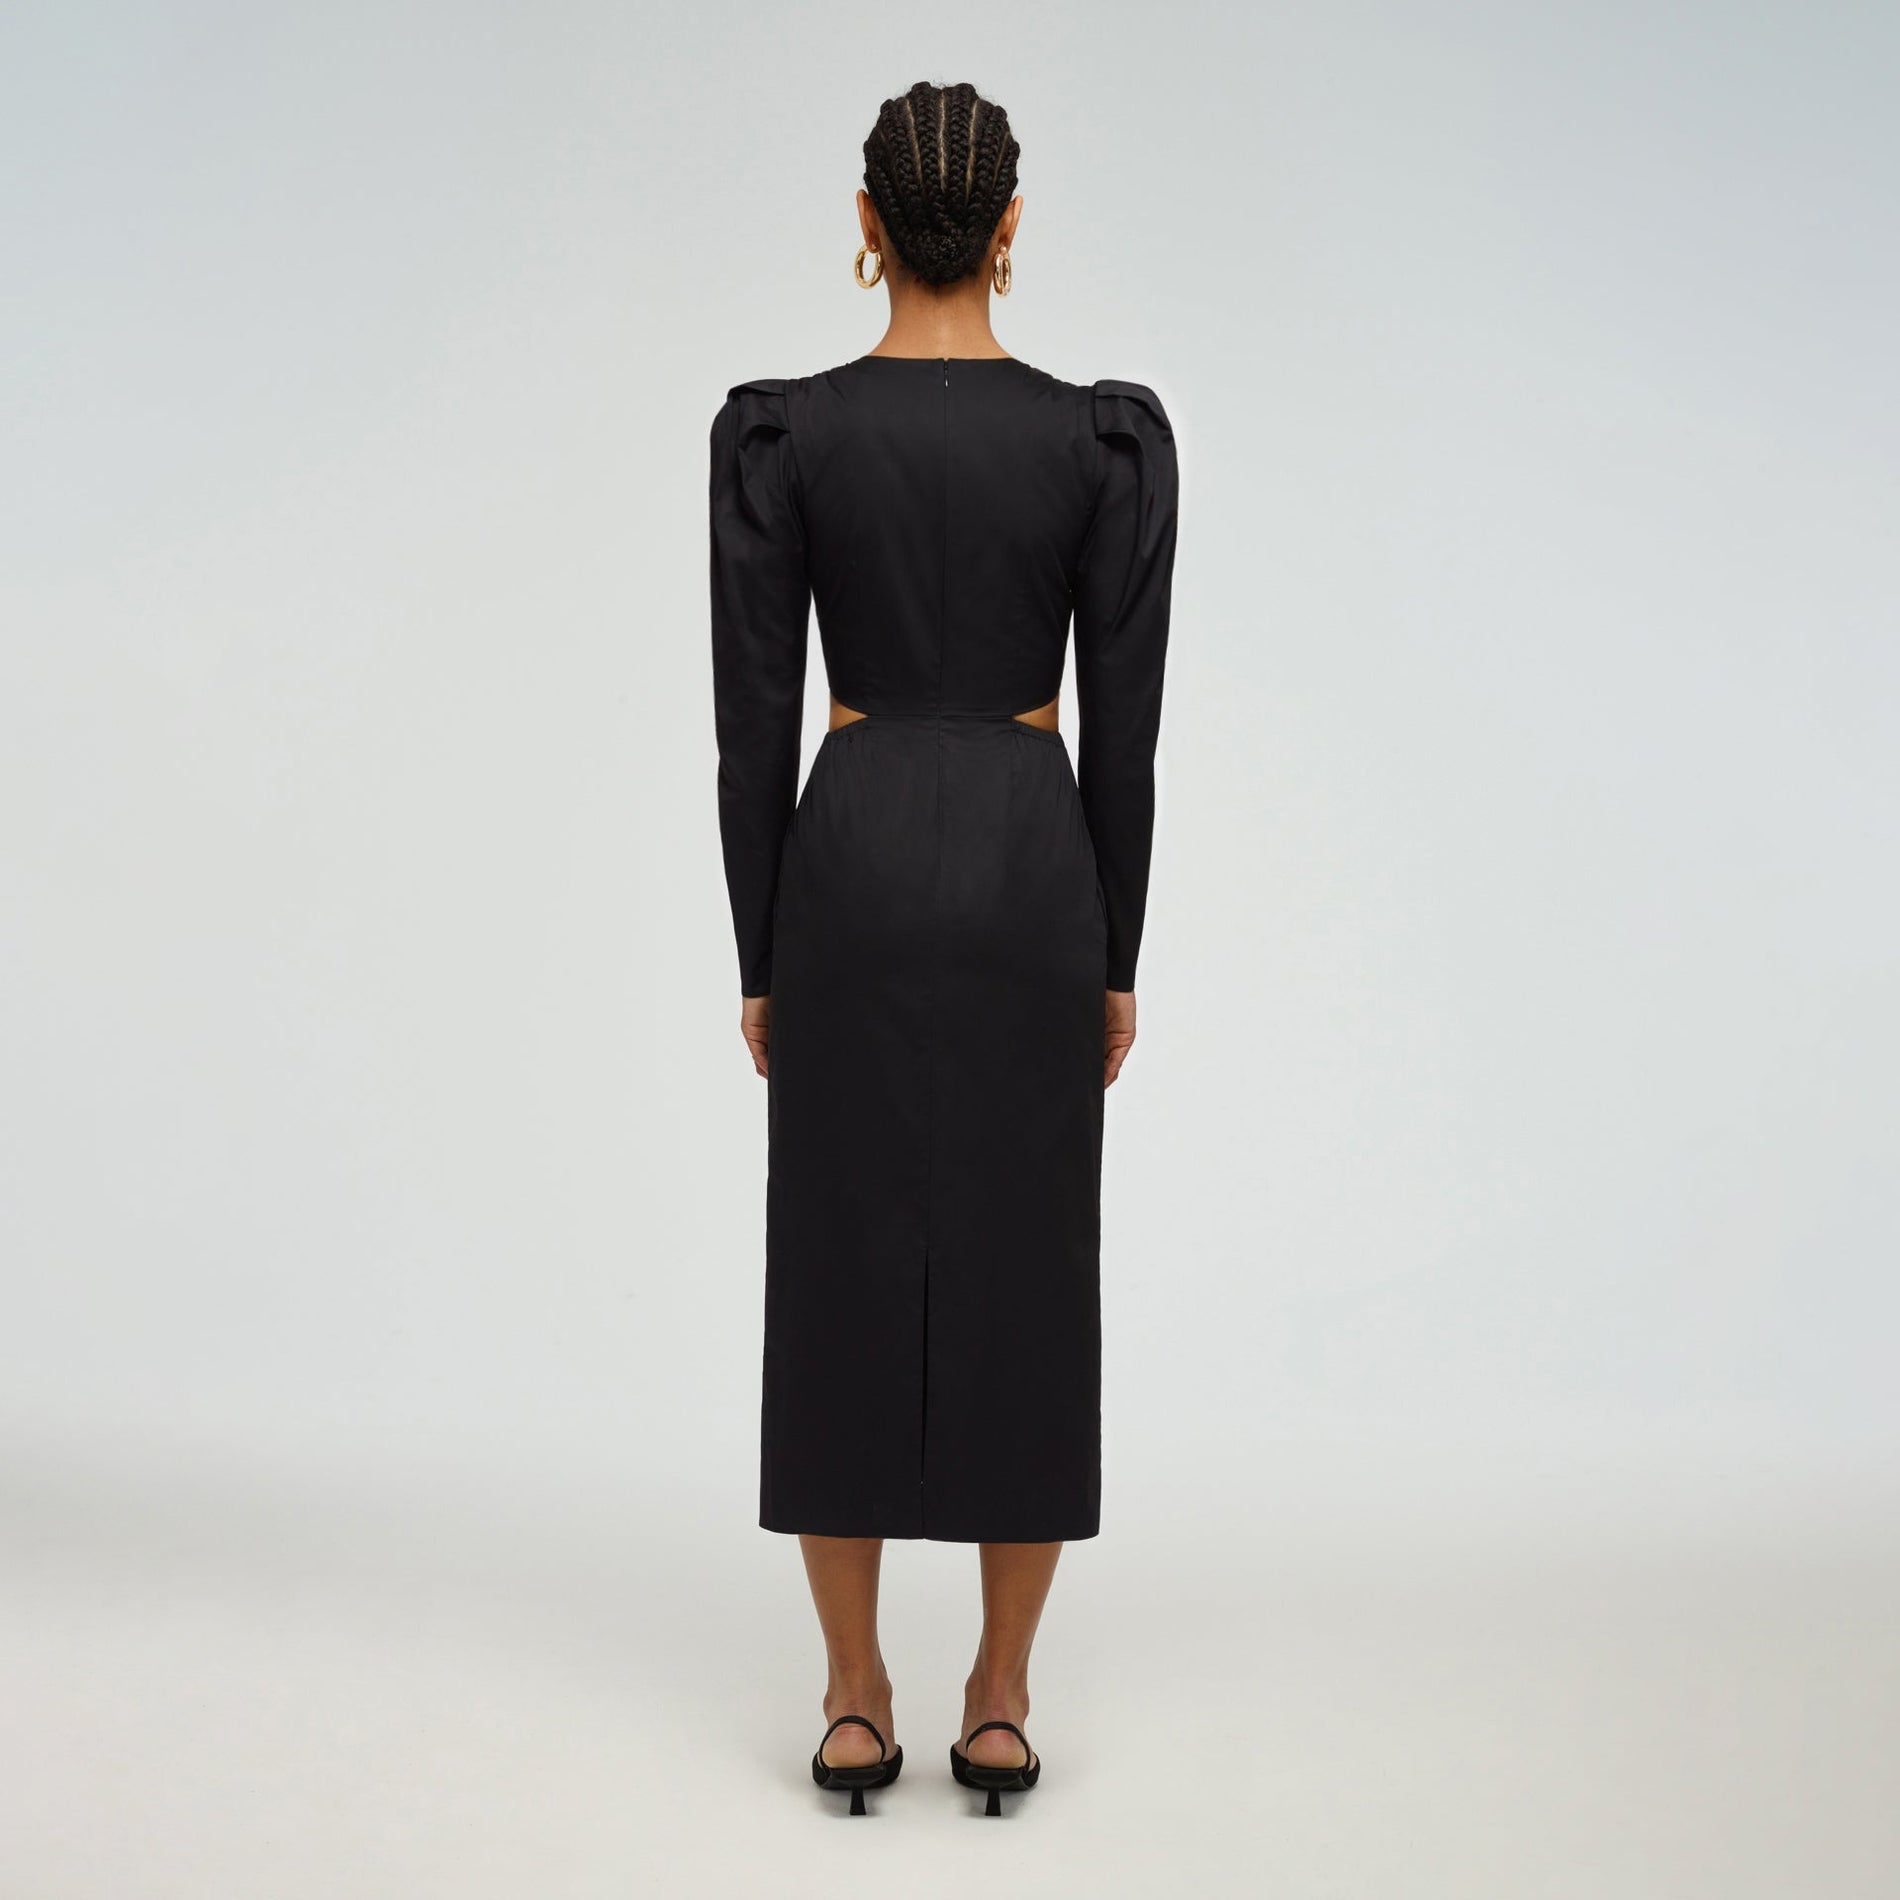 A woman wearing the Black Cotton Cut Out Midi Dress